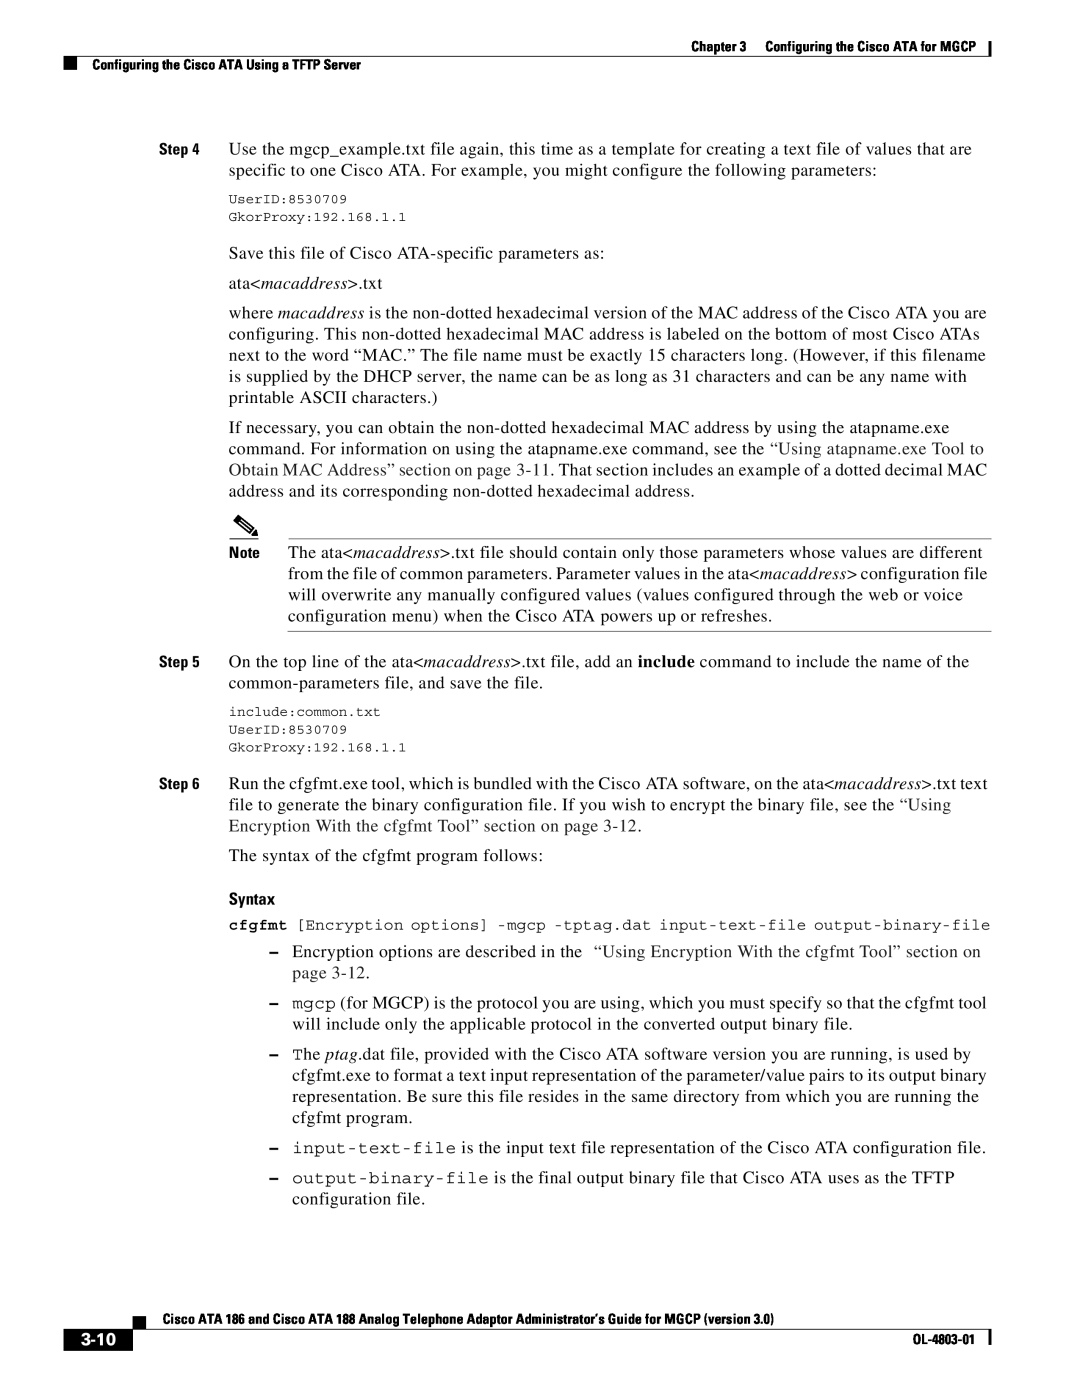 Cisco Systems ATA 186 manual atamacaddress.txt, Syntax, 3-10 